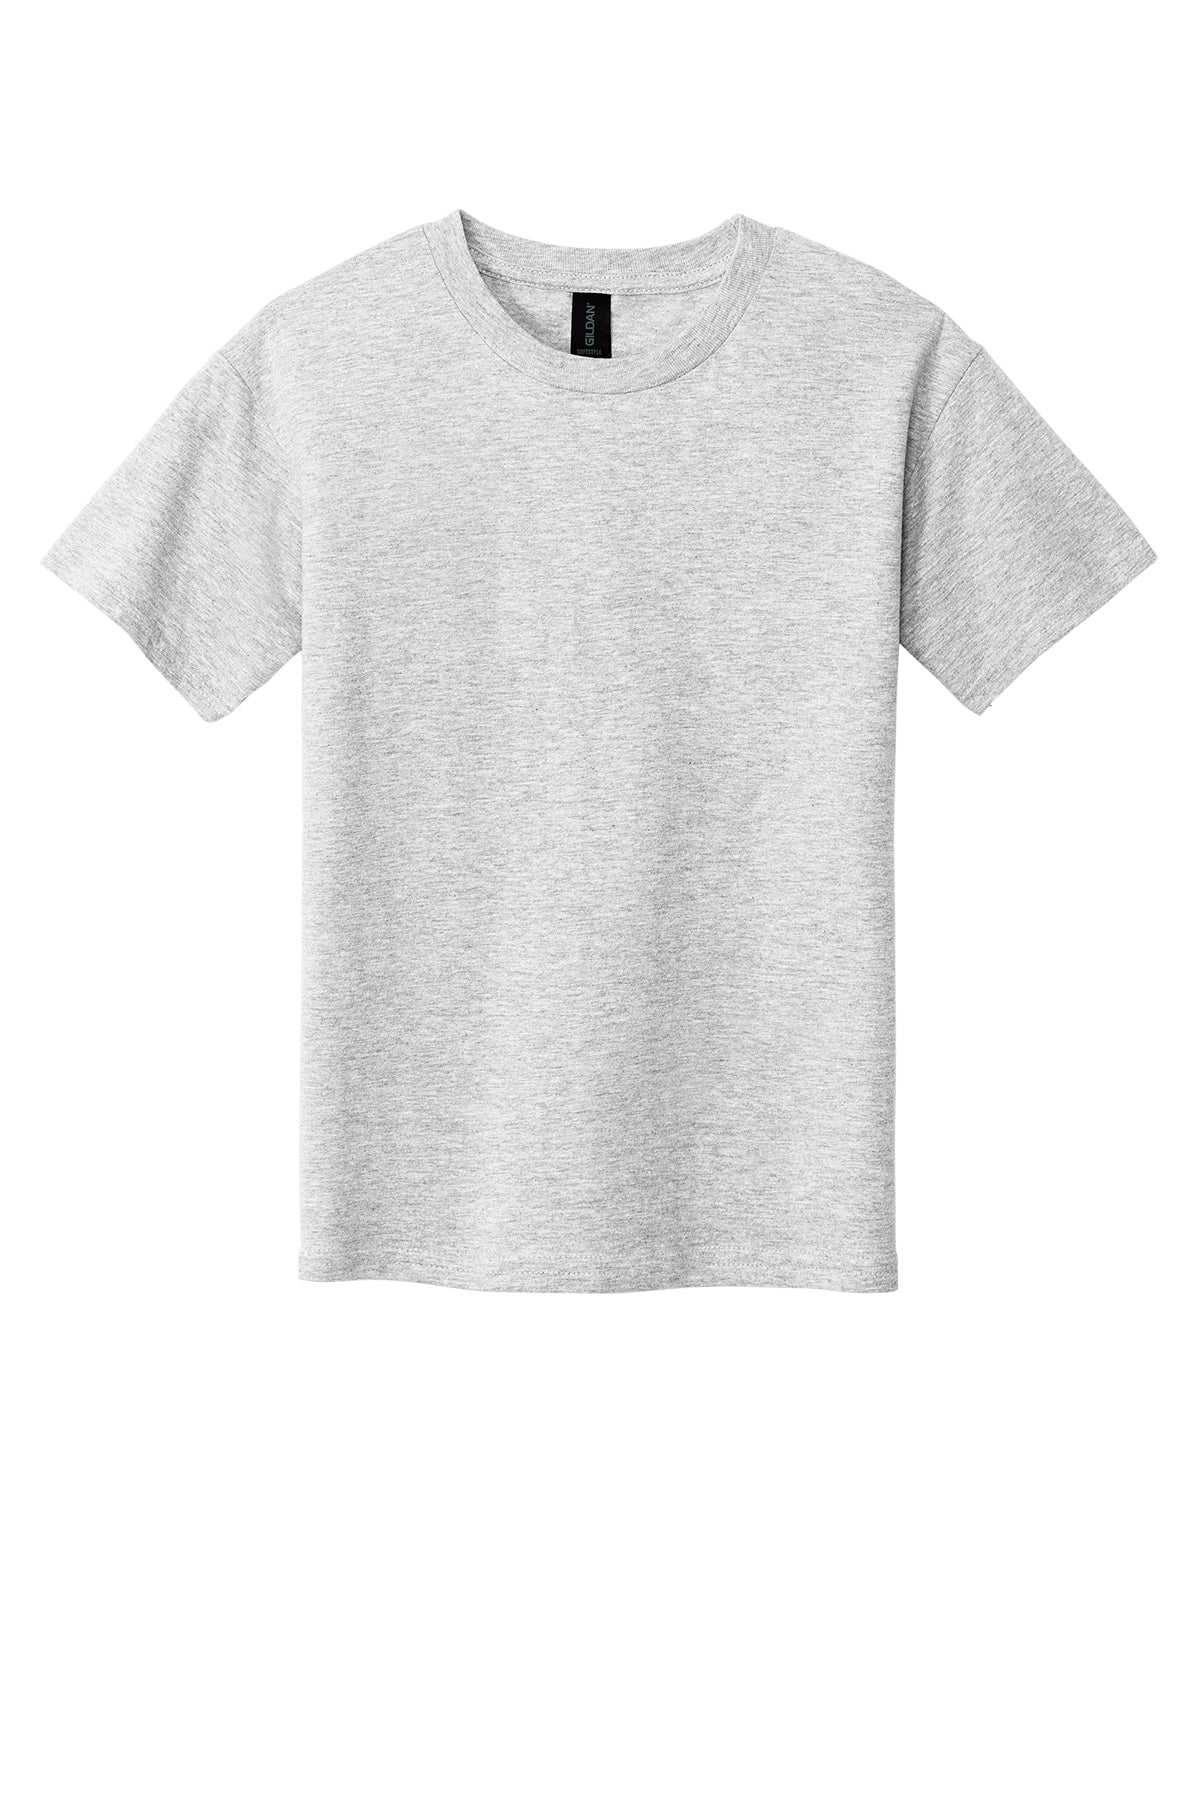 Gilden 64000B Youth T-Shirt Yth Small / Sport Gray